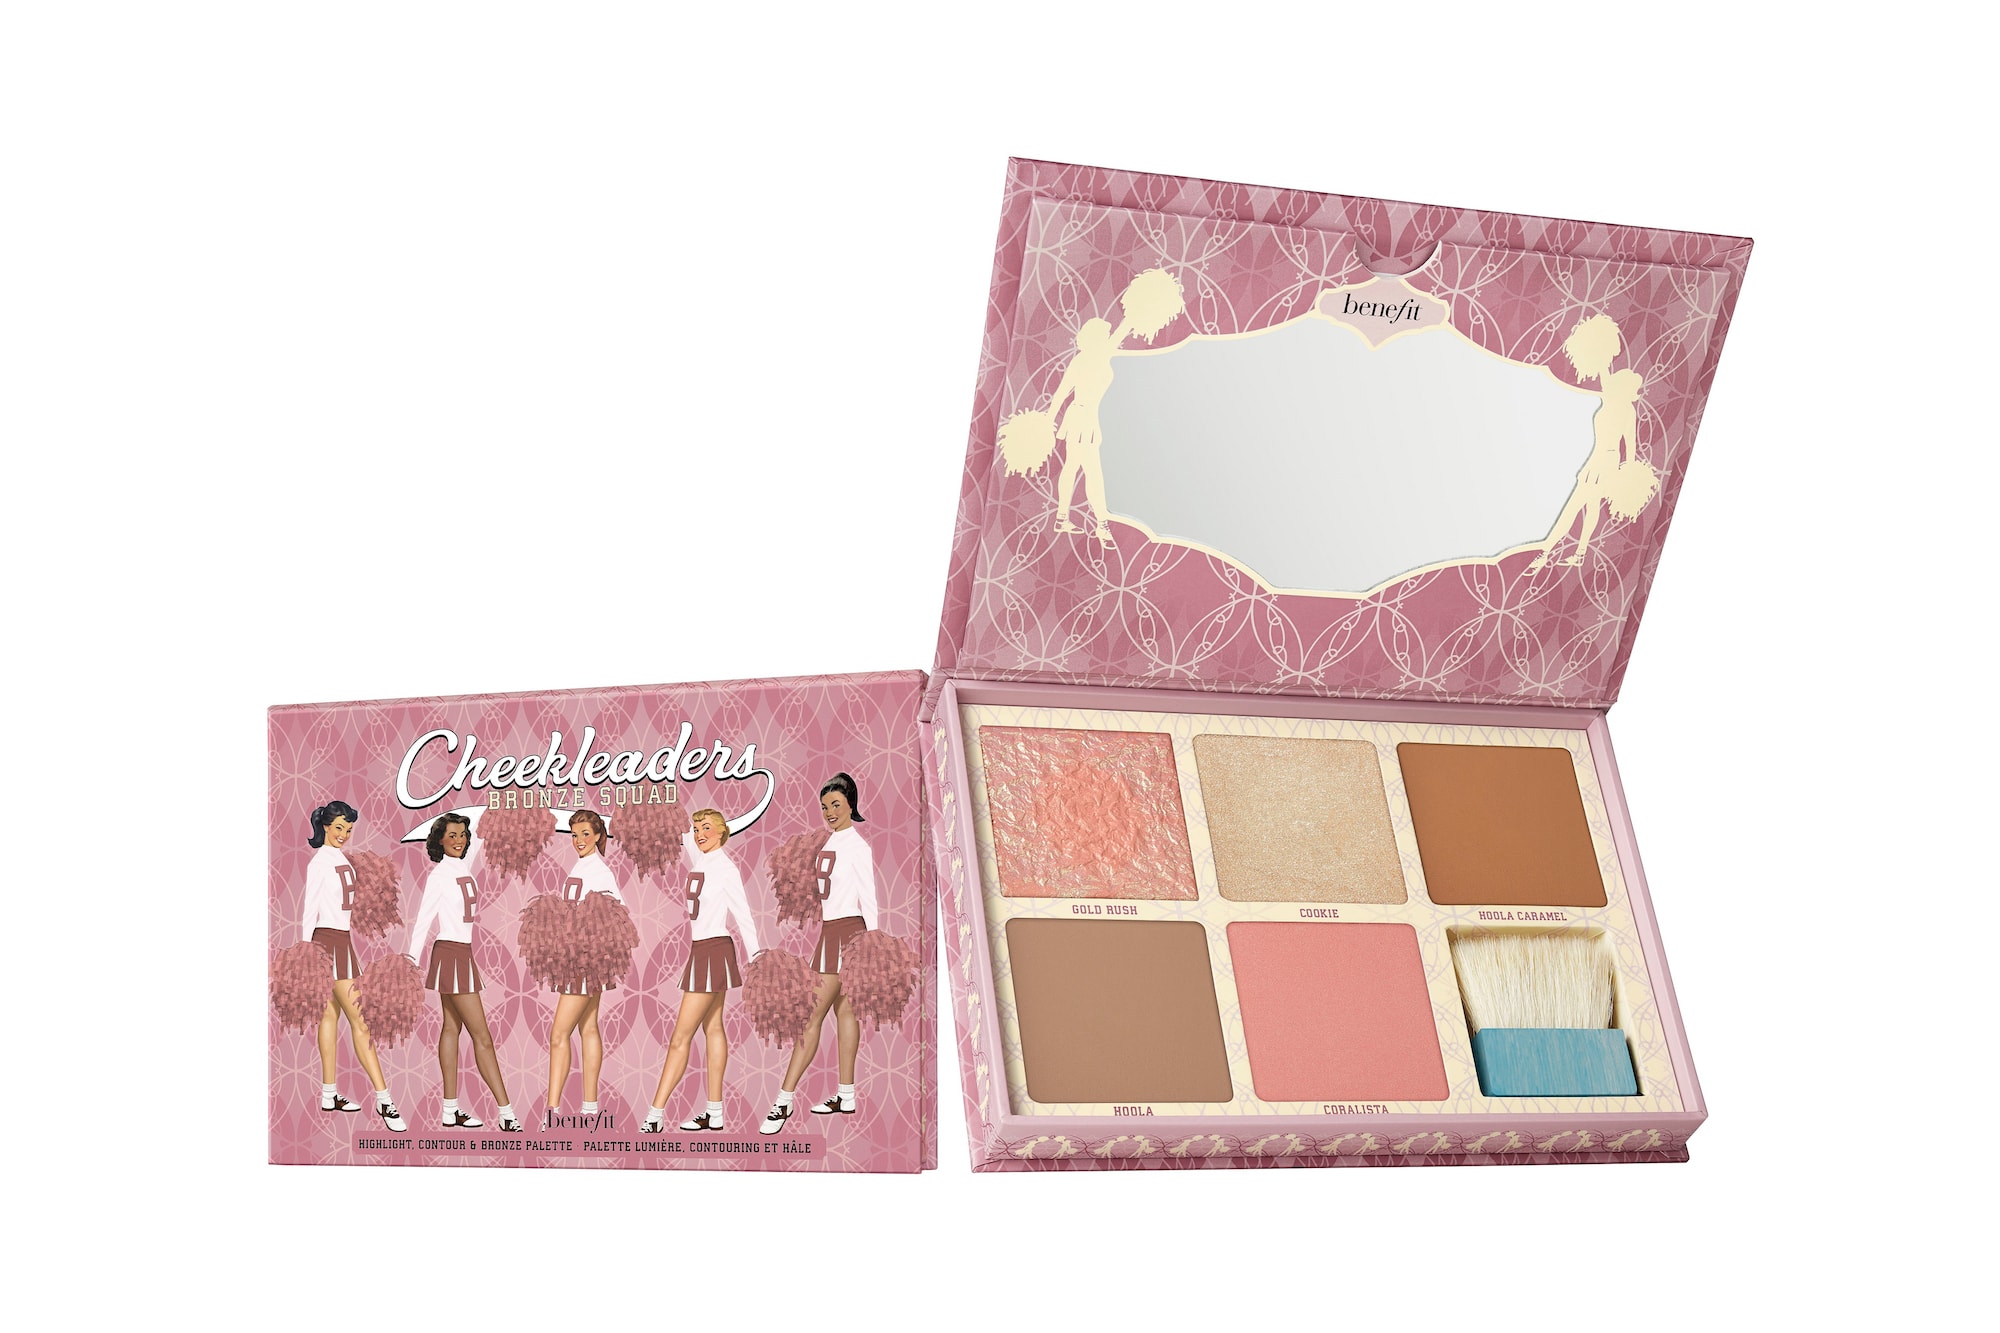 Benefit Cosmetics Releases Blush/Bronzer Palette Makeup Product Cheekleader Release Date